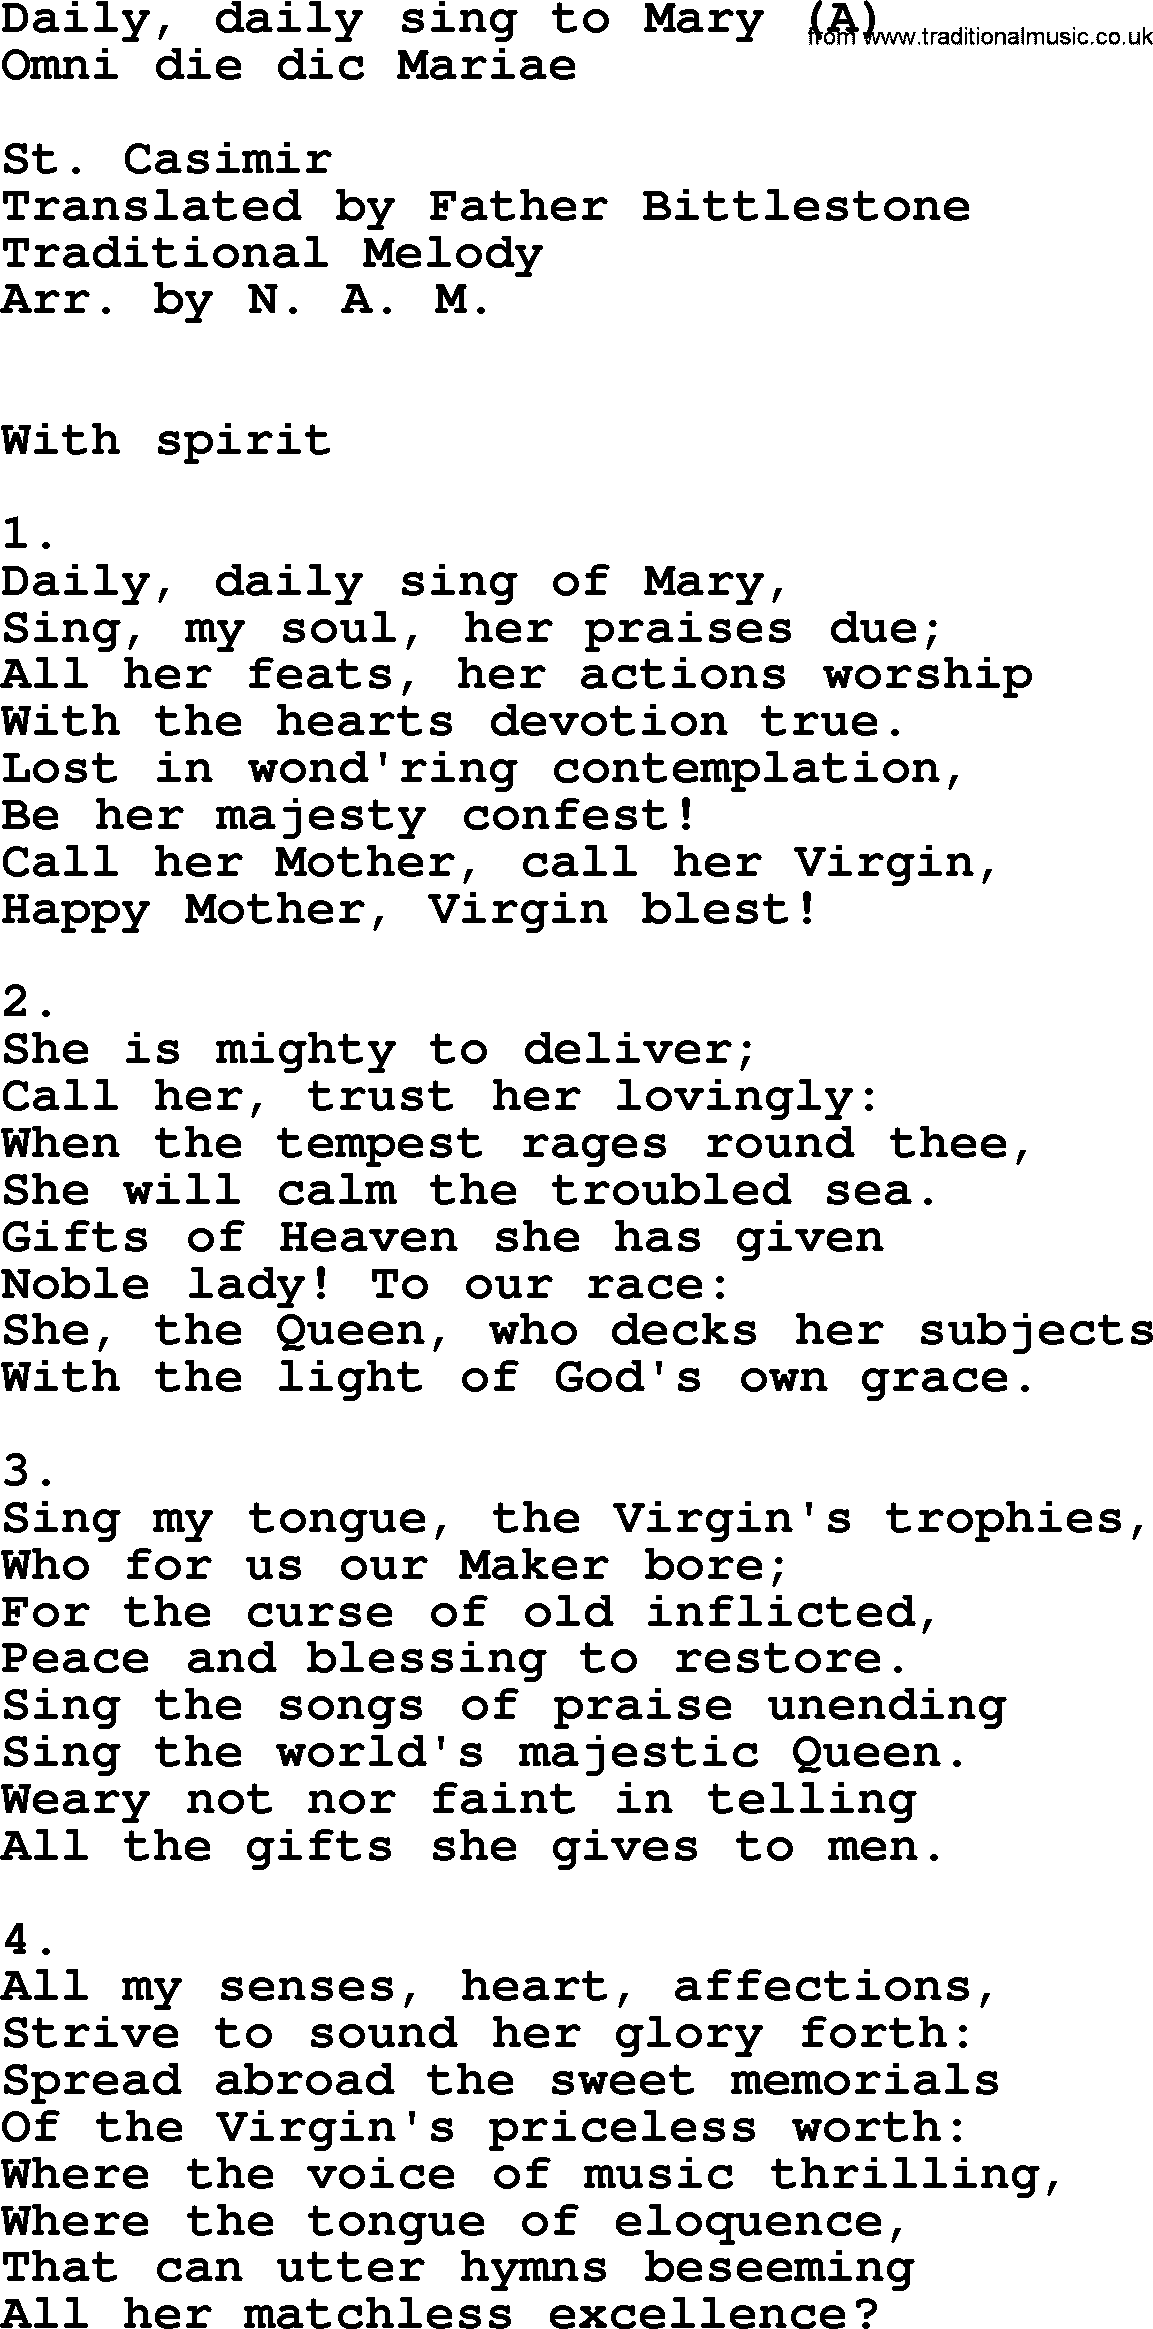 Catholic Hymn: Daily, Daily Sing To Mary1 lyrics with PDF